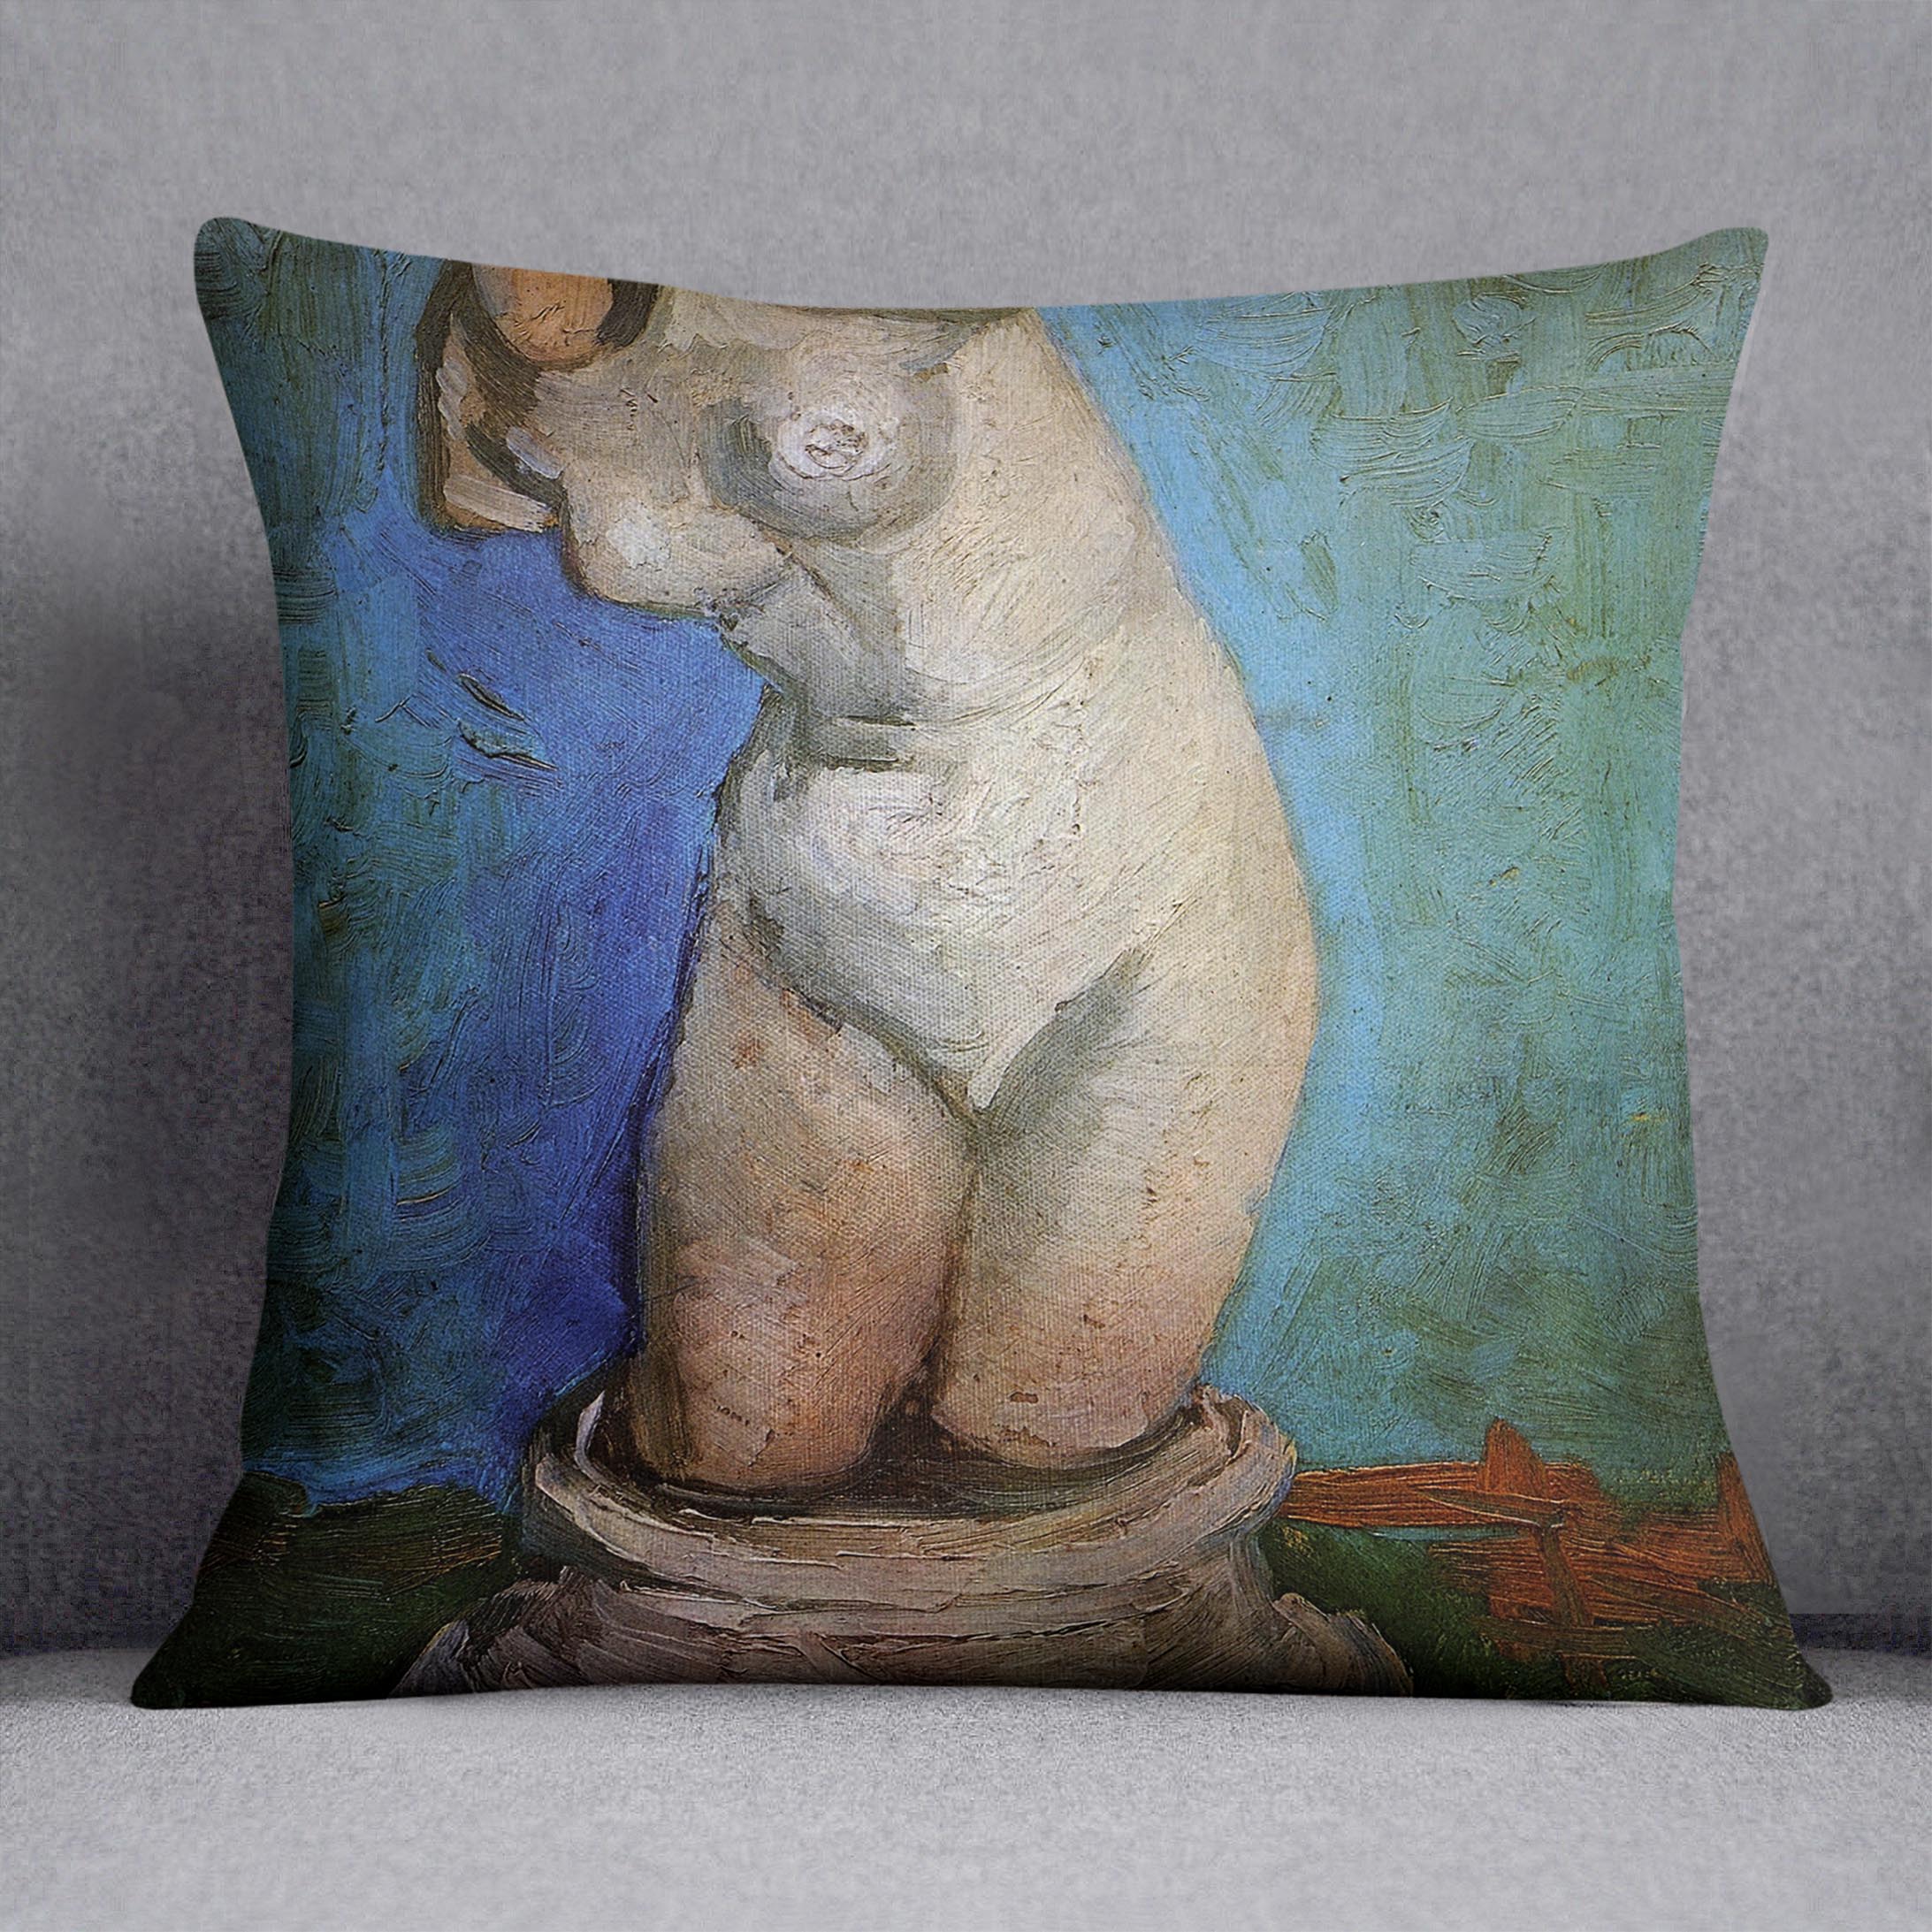 Plaster Statuette of a Female Torso 2 by Van Gogh Cushion